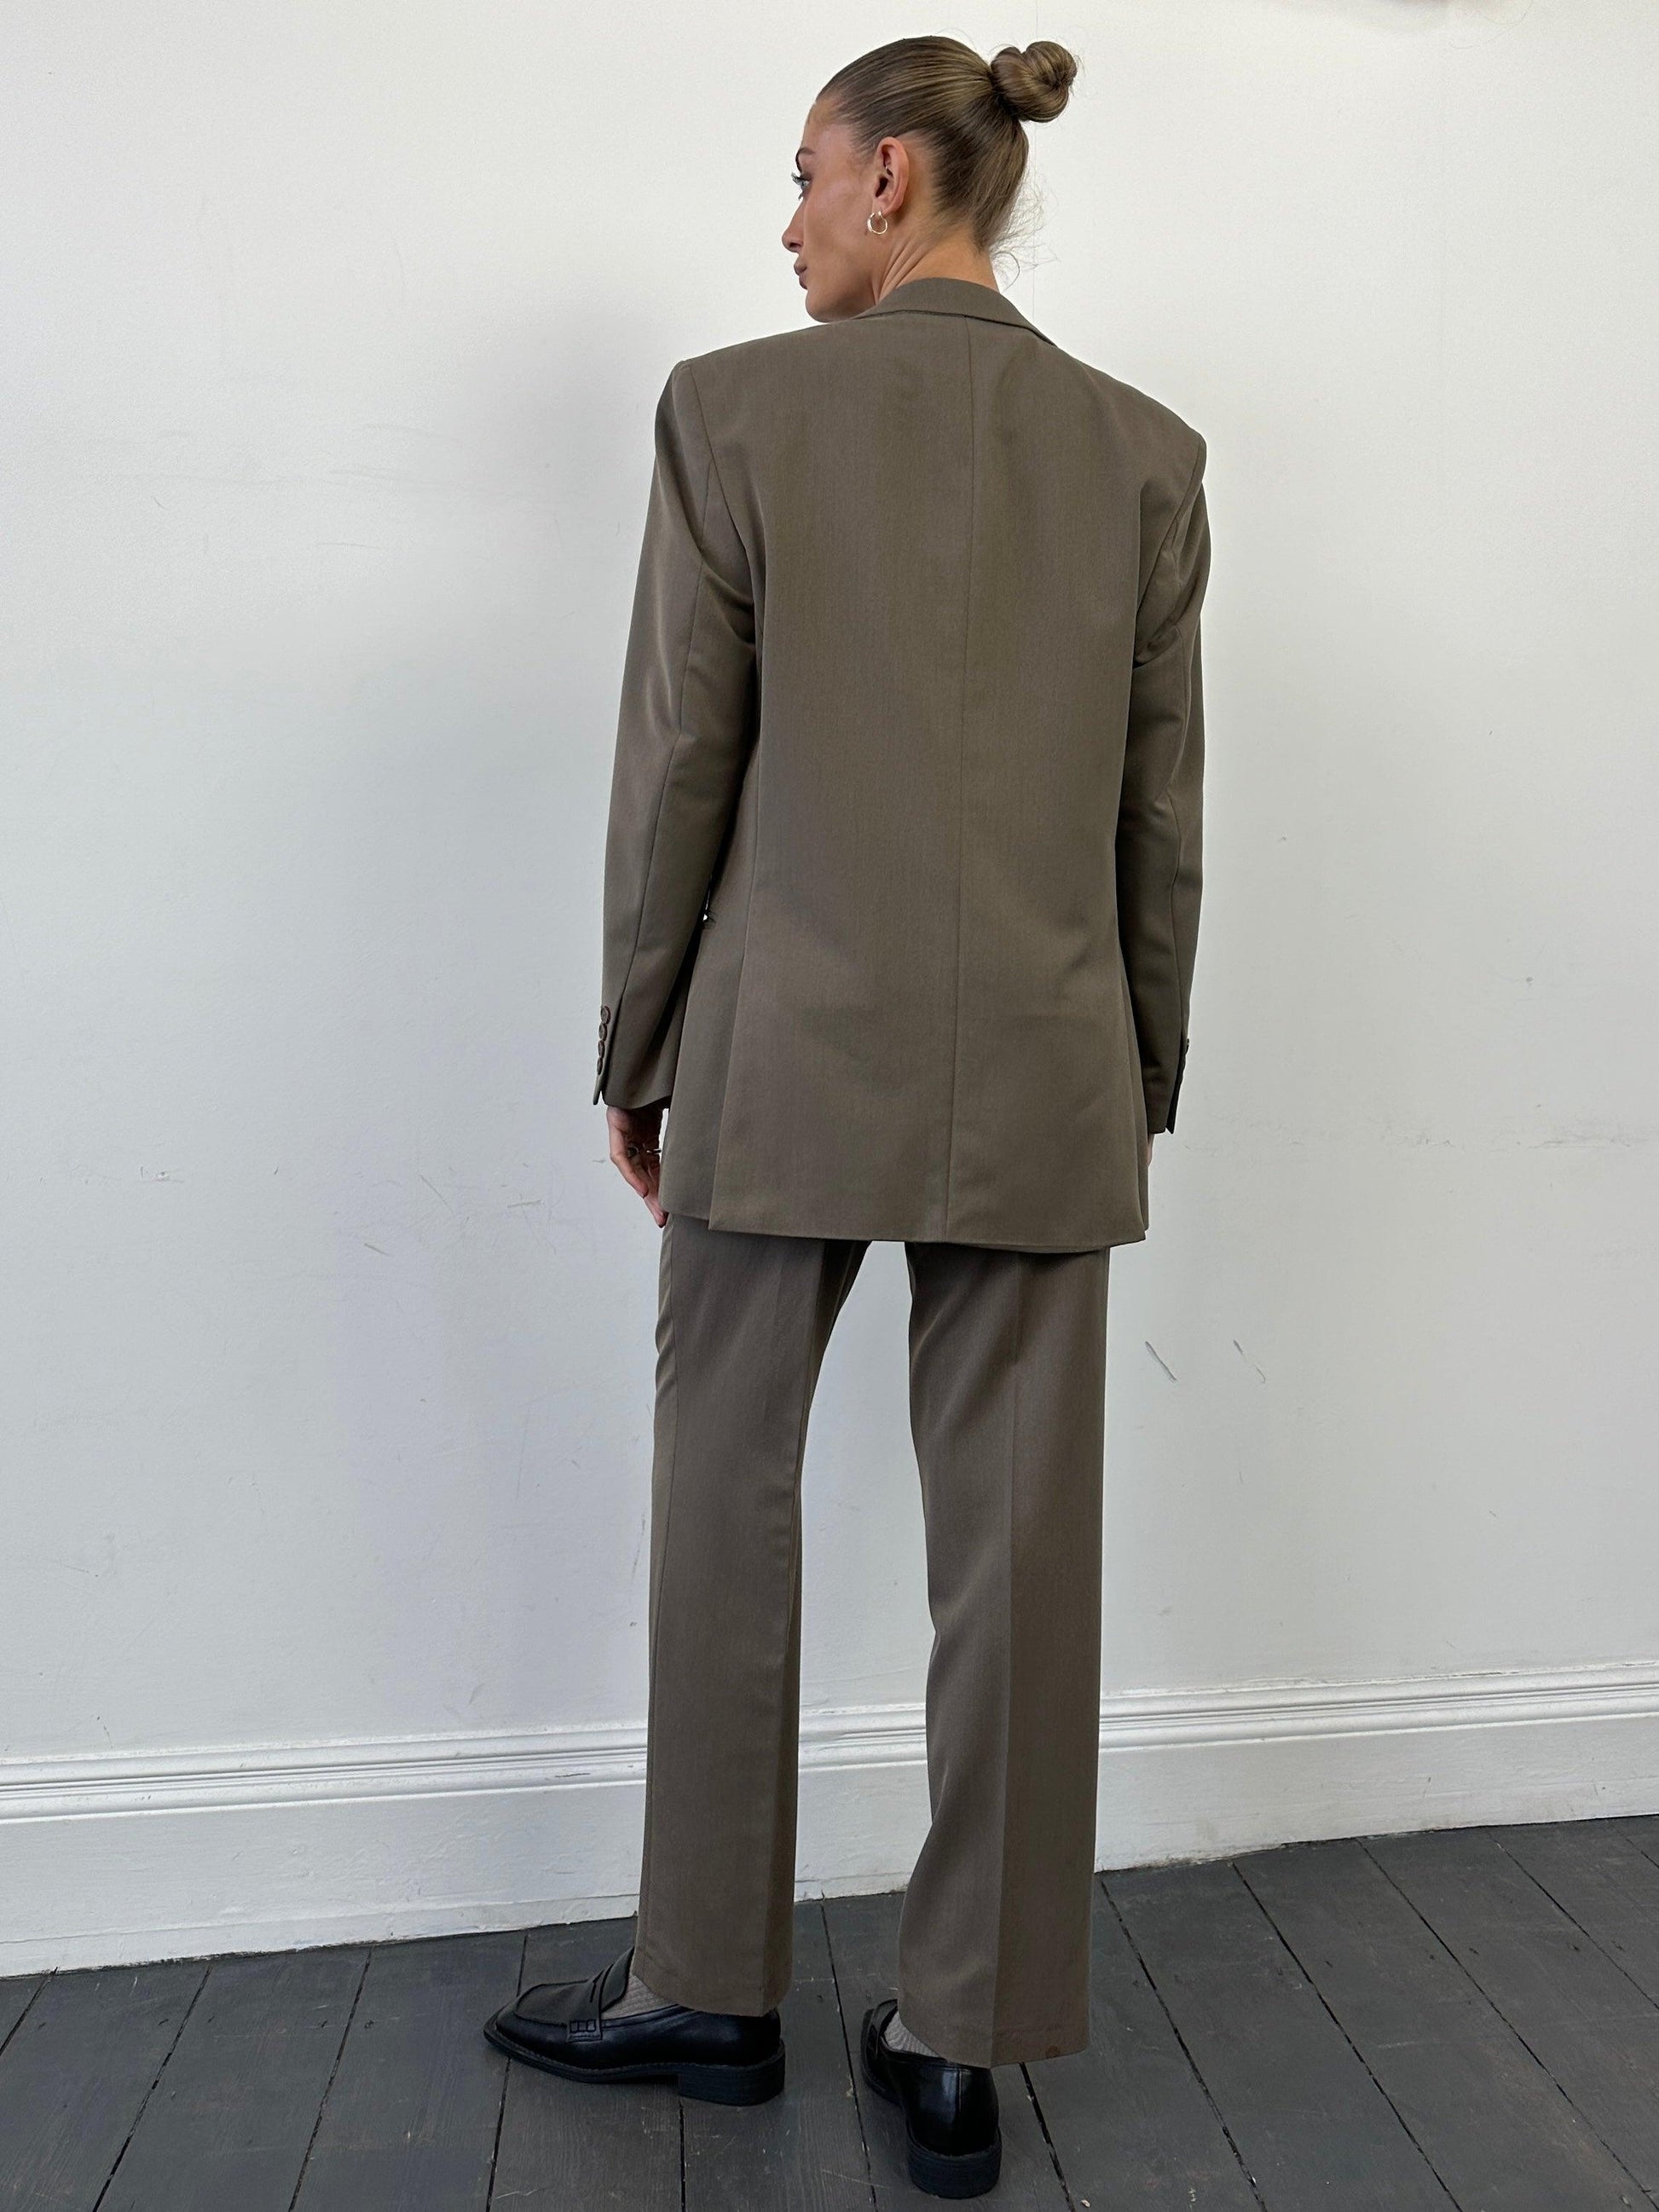 Vintage Three Piece Suit - 36R/W30 - Known Source